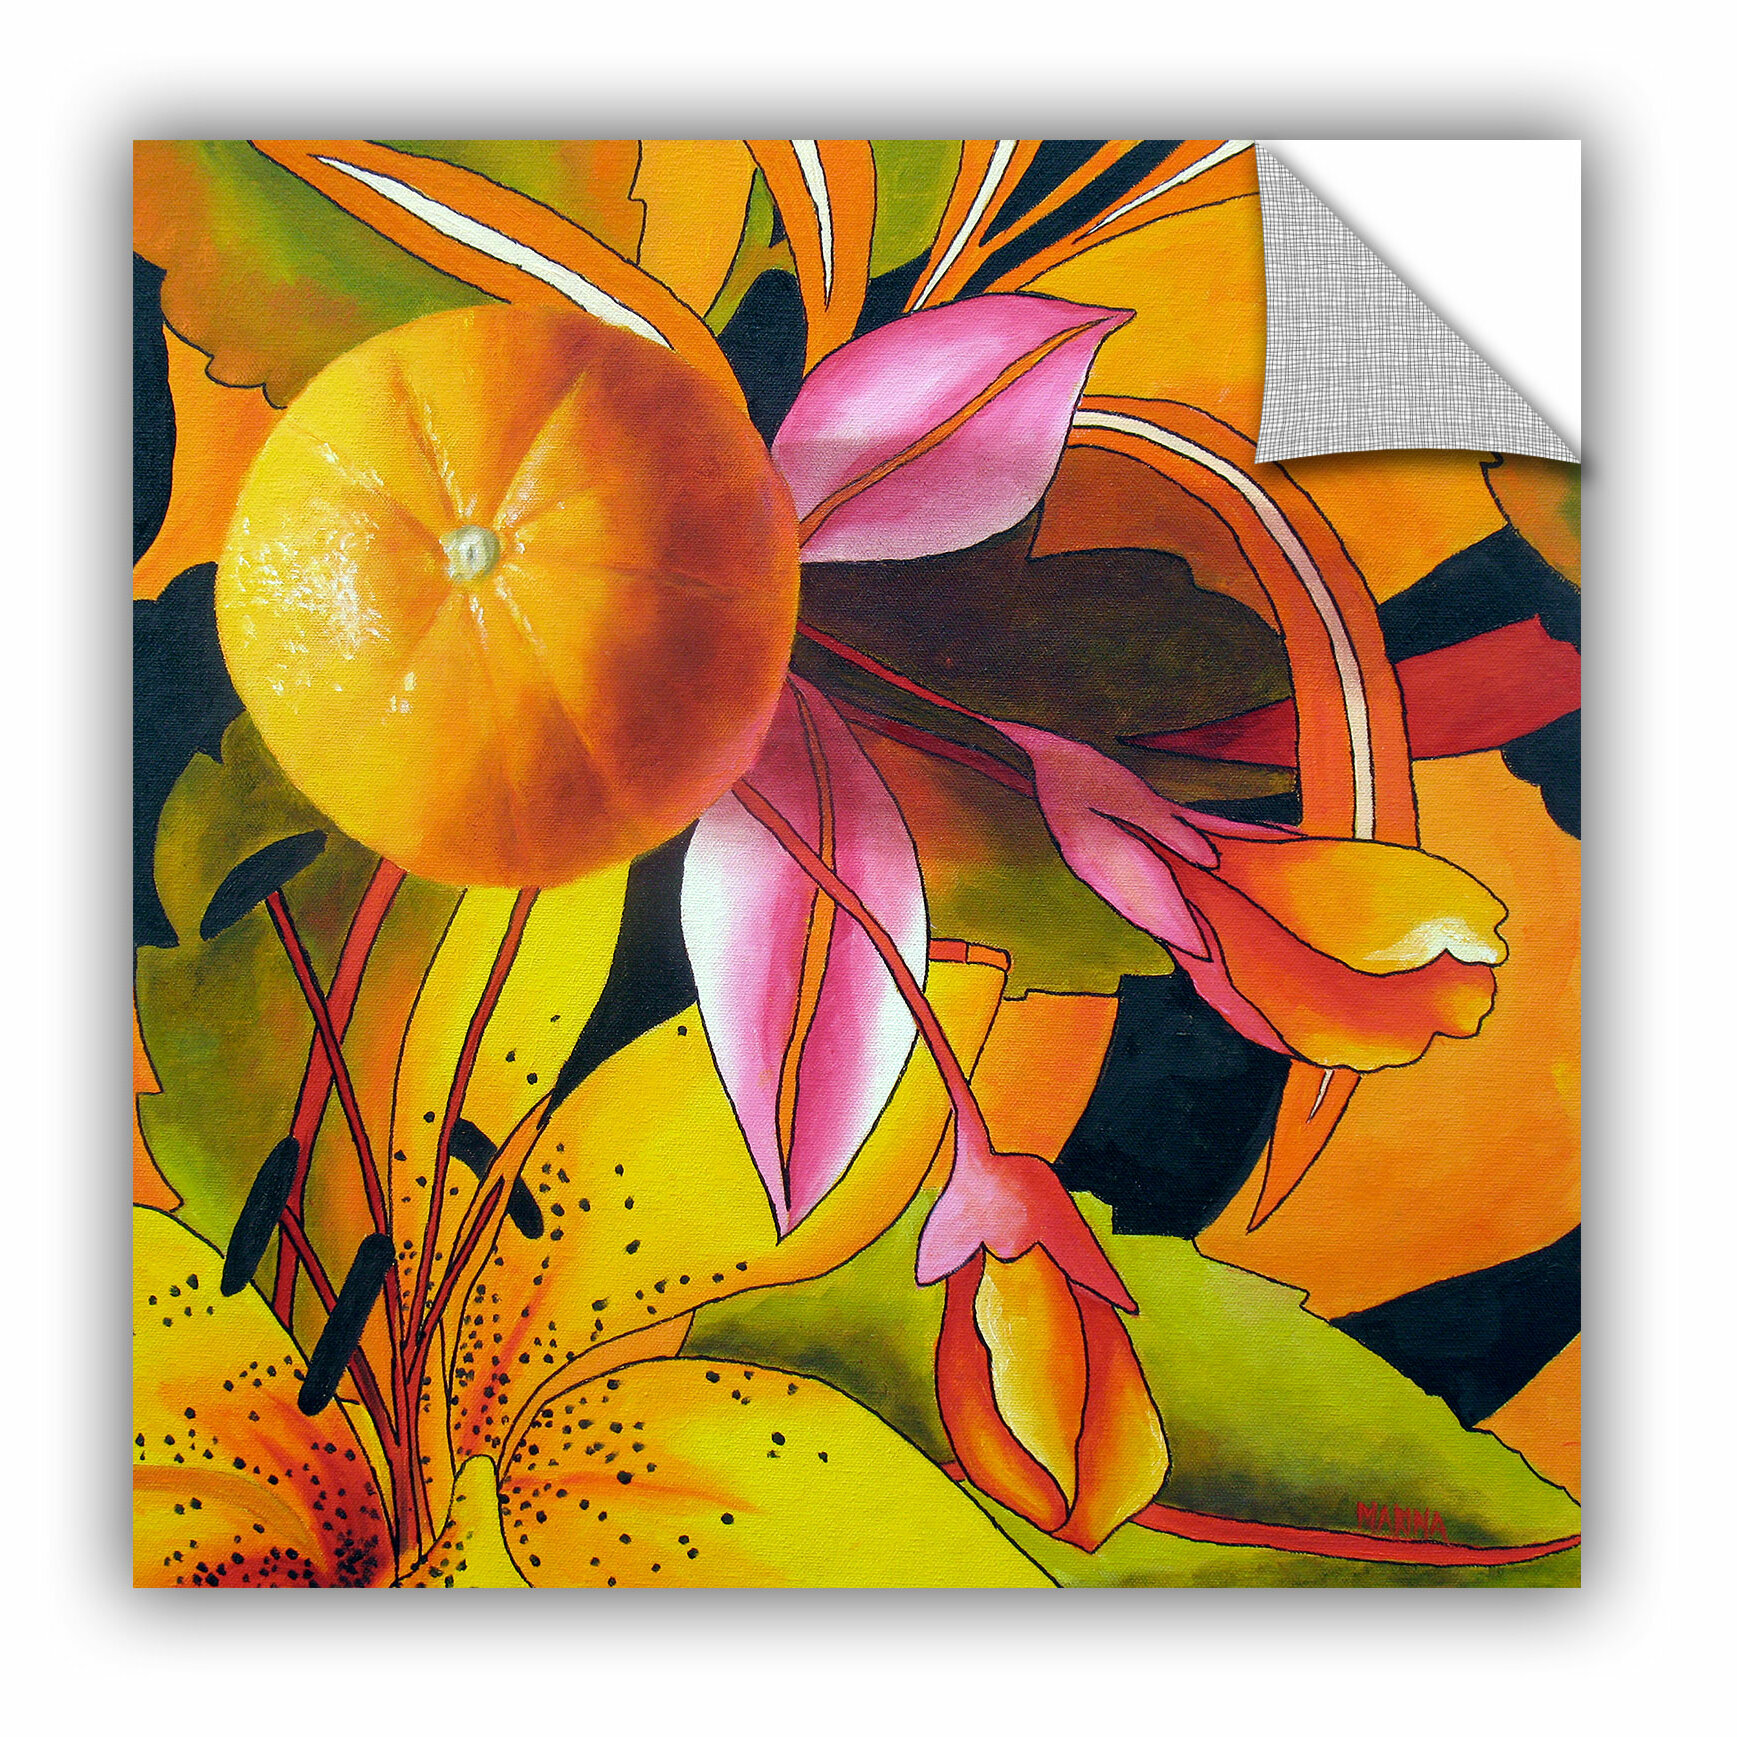 ArtWall Marina Petros Love That Orange Art Appeelz Removable Wall Art Graphic 36 by 36